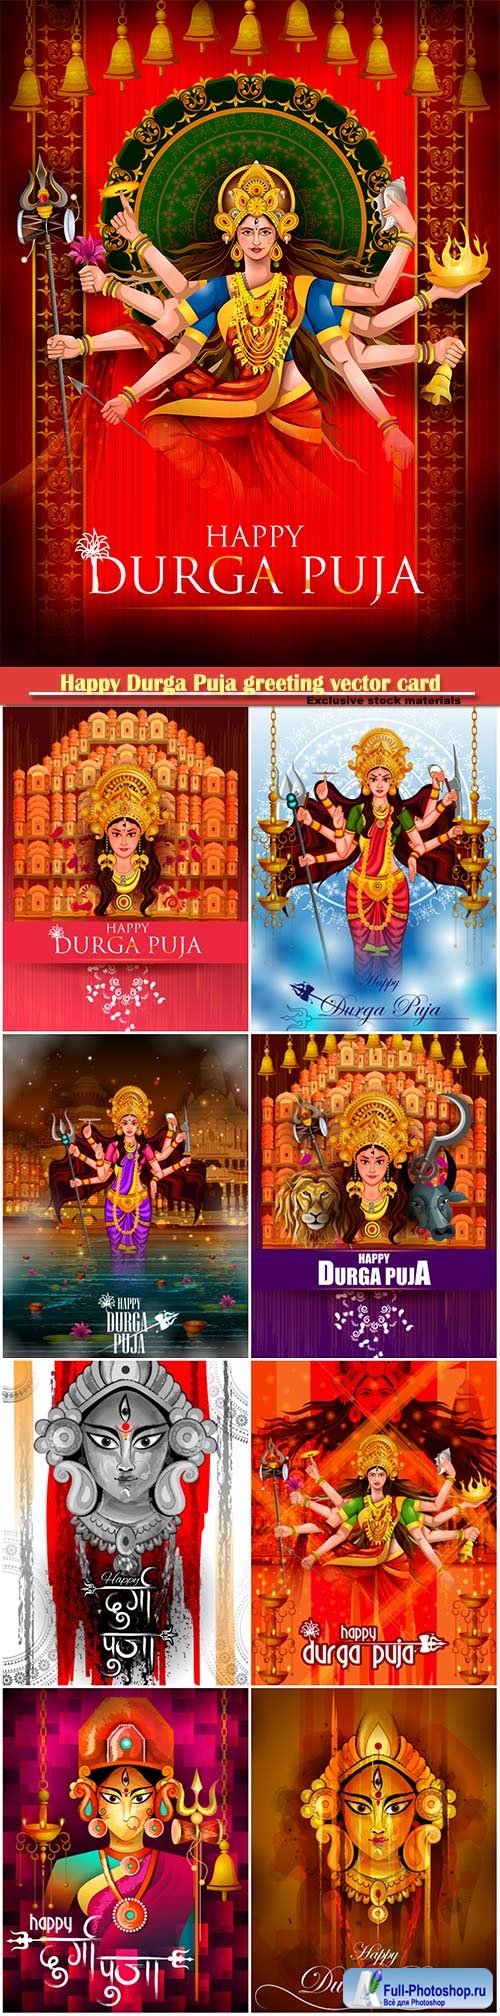 Happy Durga Puja greeting vector card